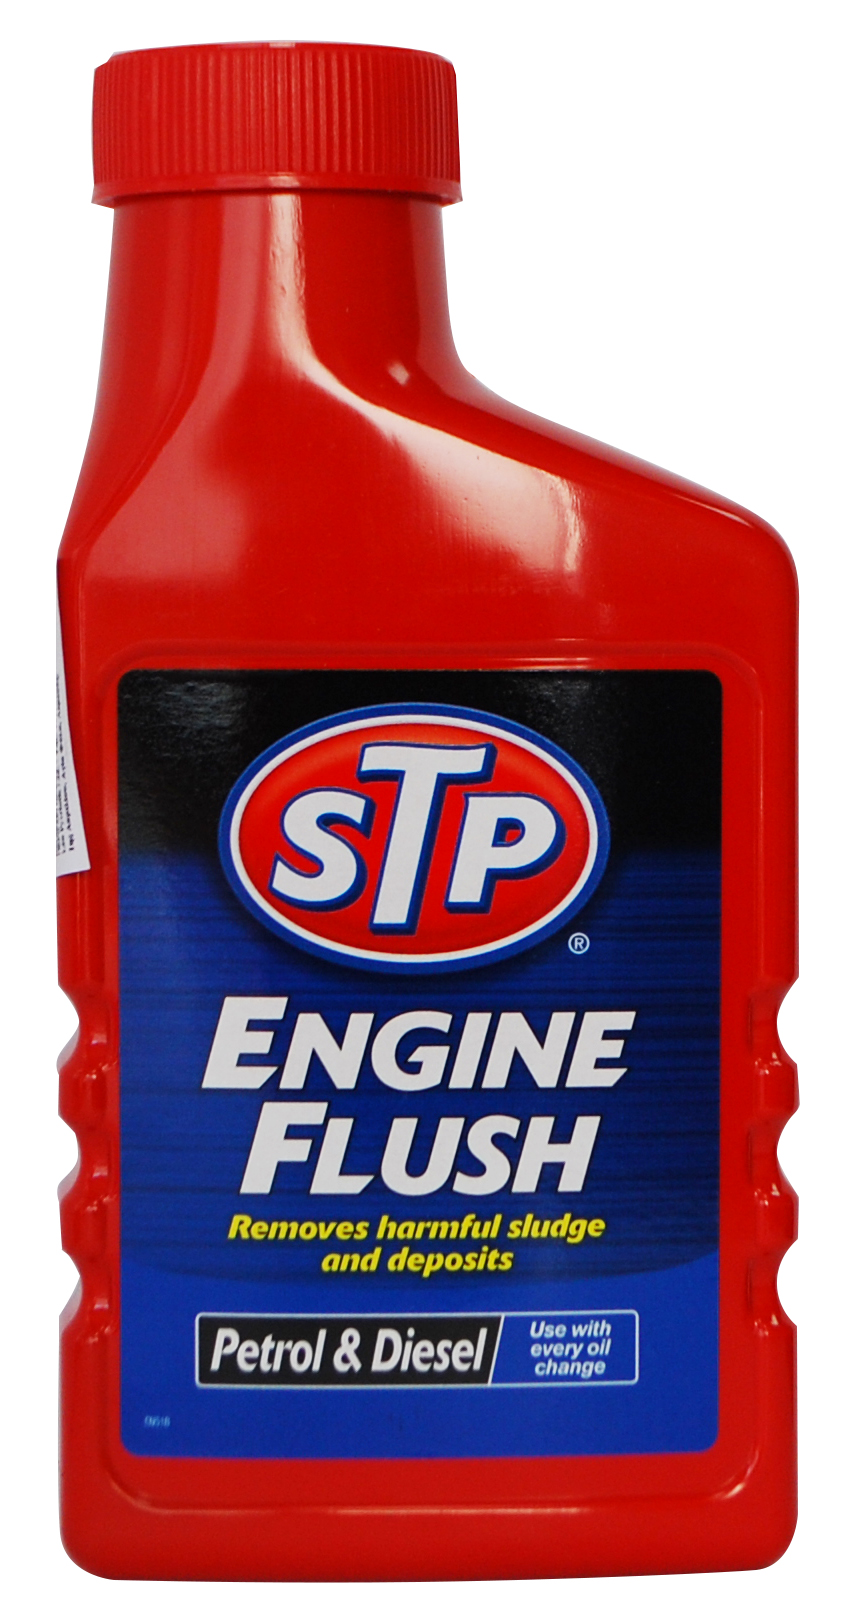 STP ENGINE FLUSH 450ML